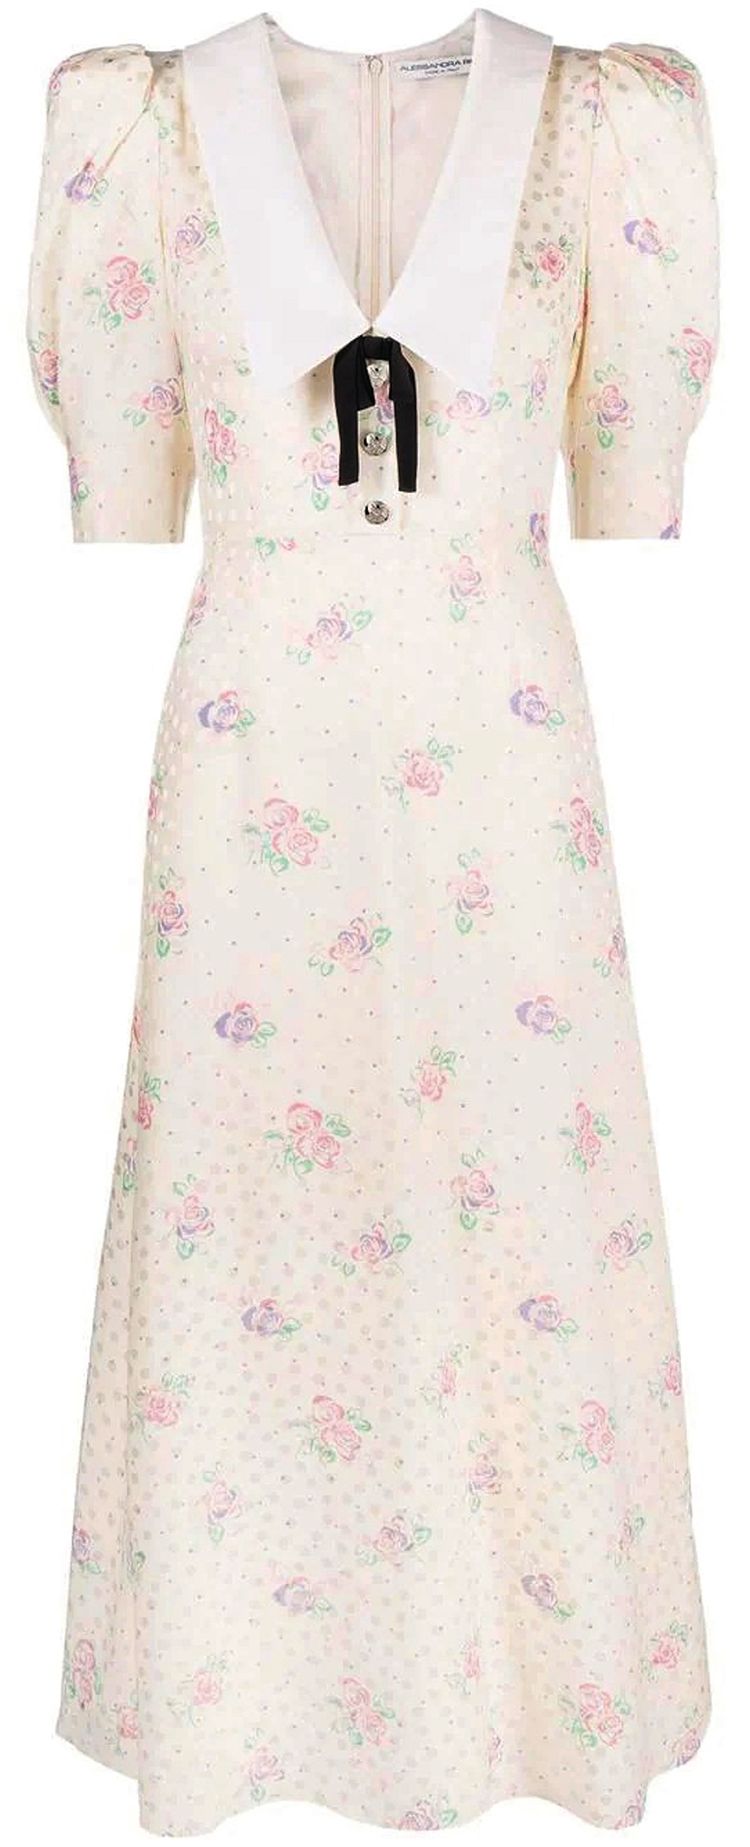 Alessandra Rich bow-detail floral-print dress Dh7,940